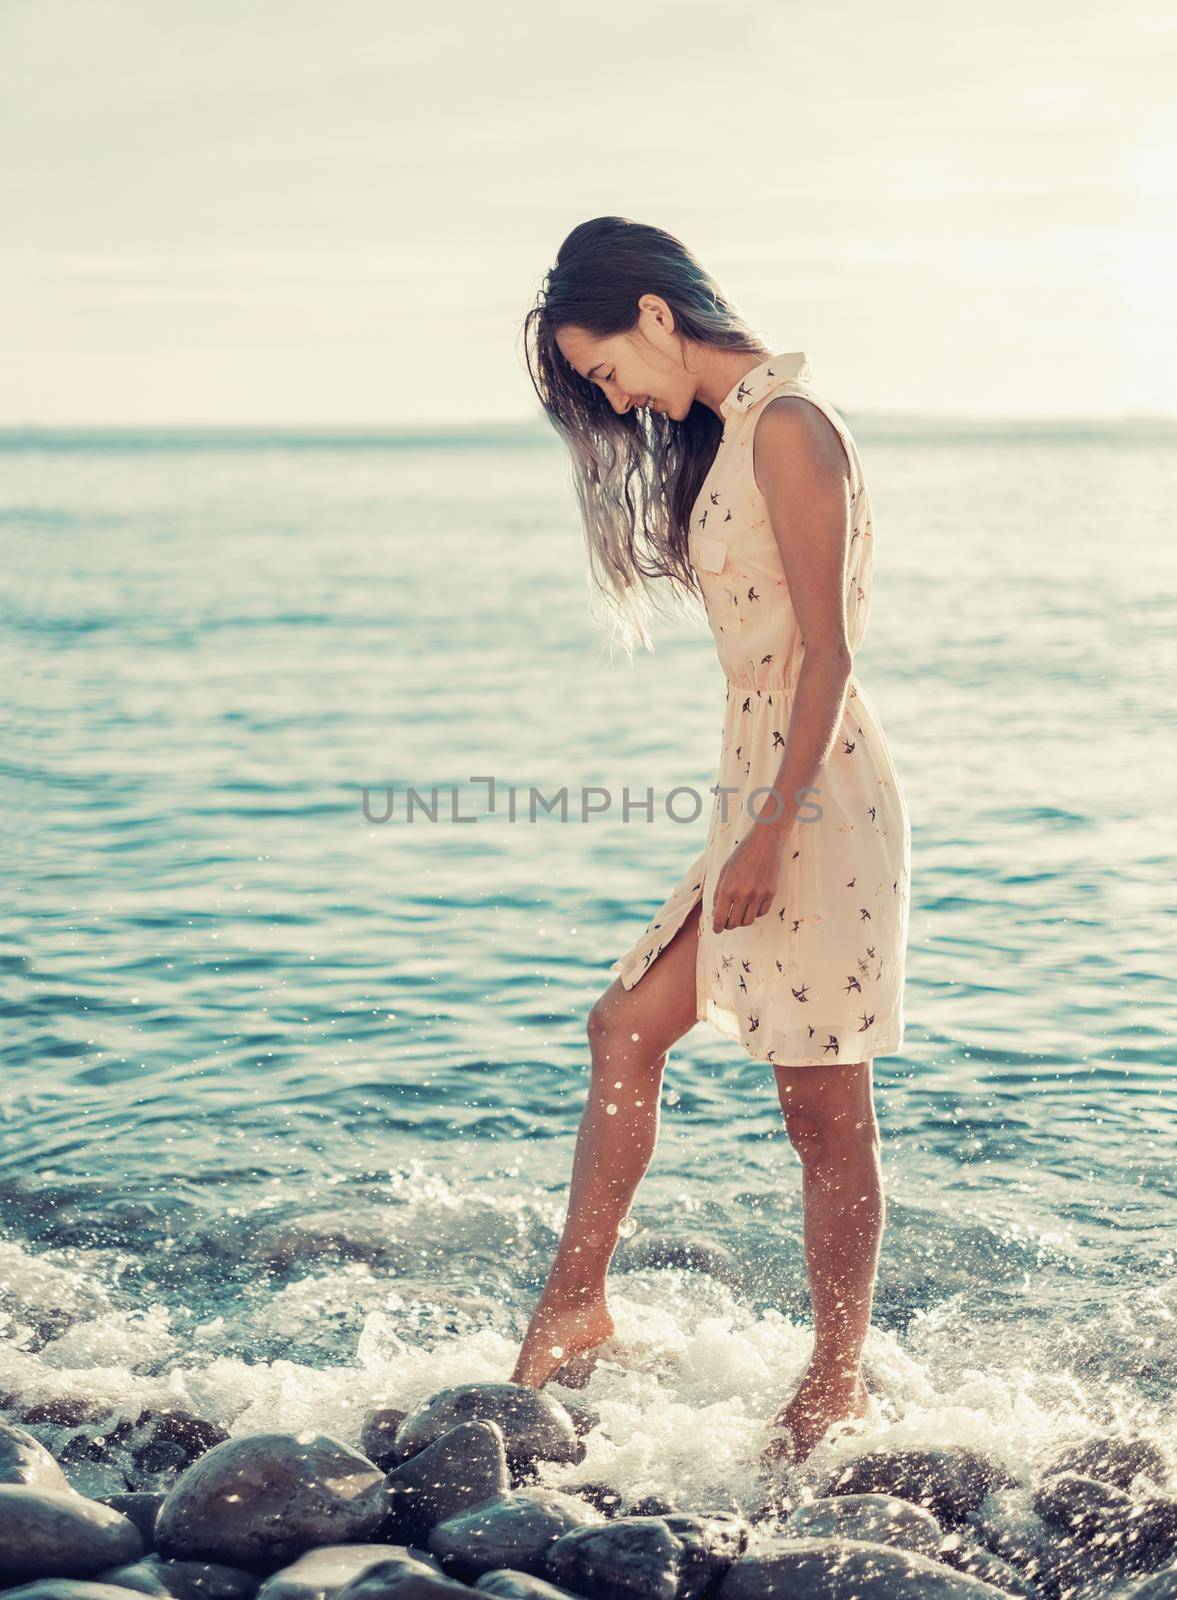 Beautiful young woman walking on pebble beach near the sea. Toned image